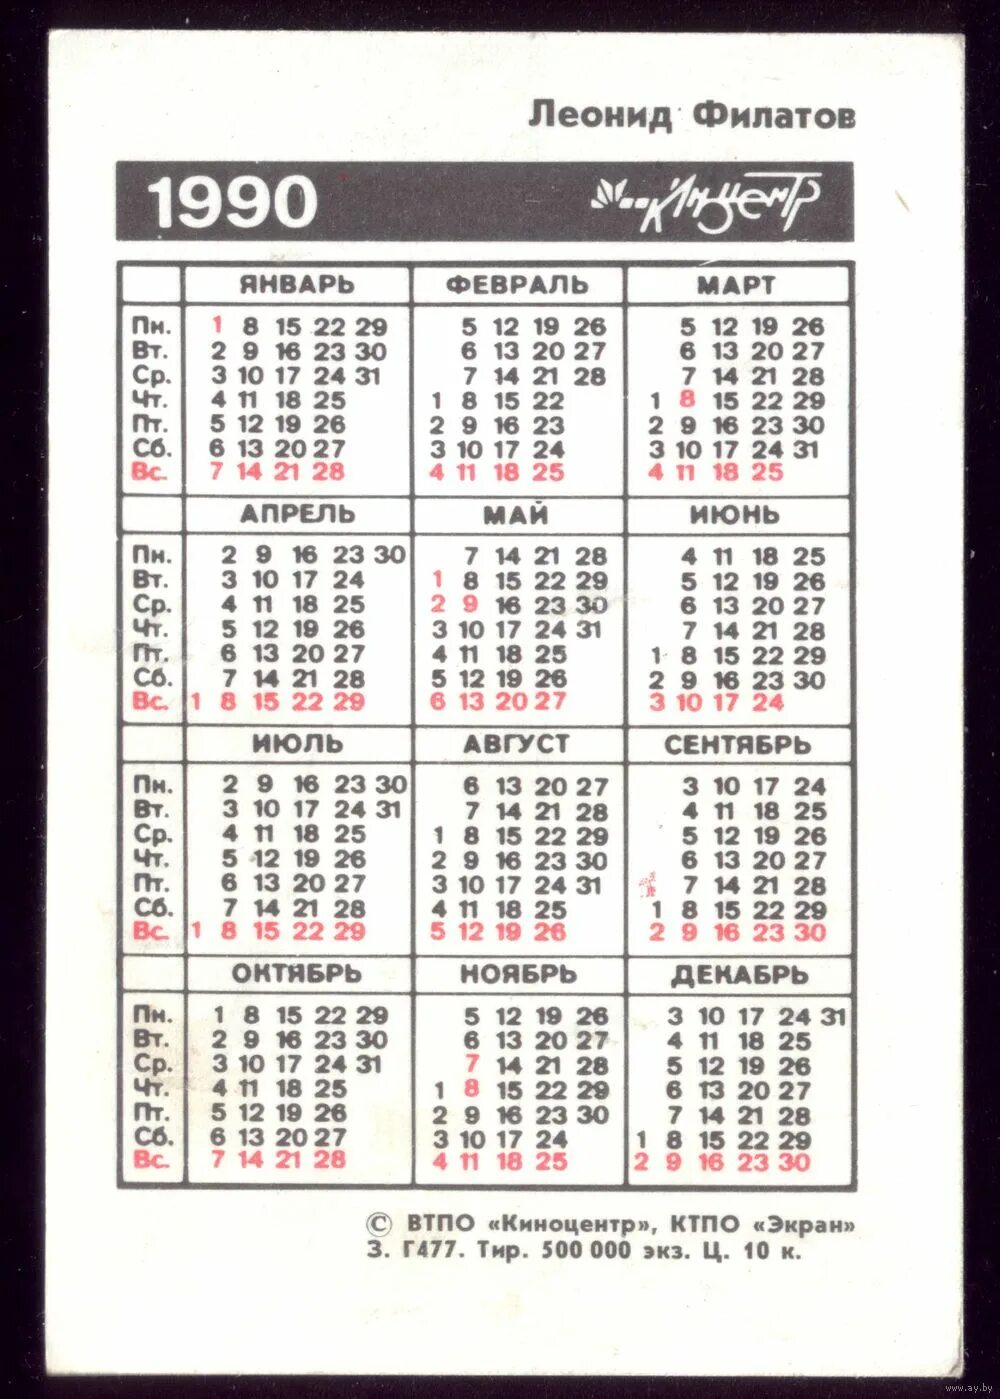 5 май 1990. 3 Апреля 1990 года день недели. Календарь 1990г. 21 Апреля 1990 год день недели. Декабрь 1990 года календарь.